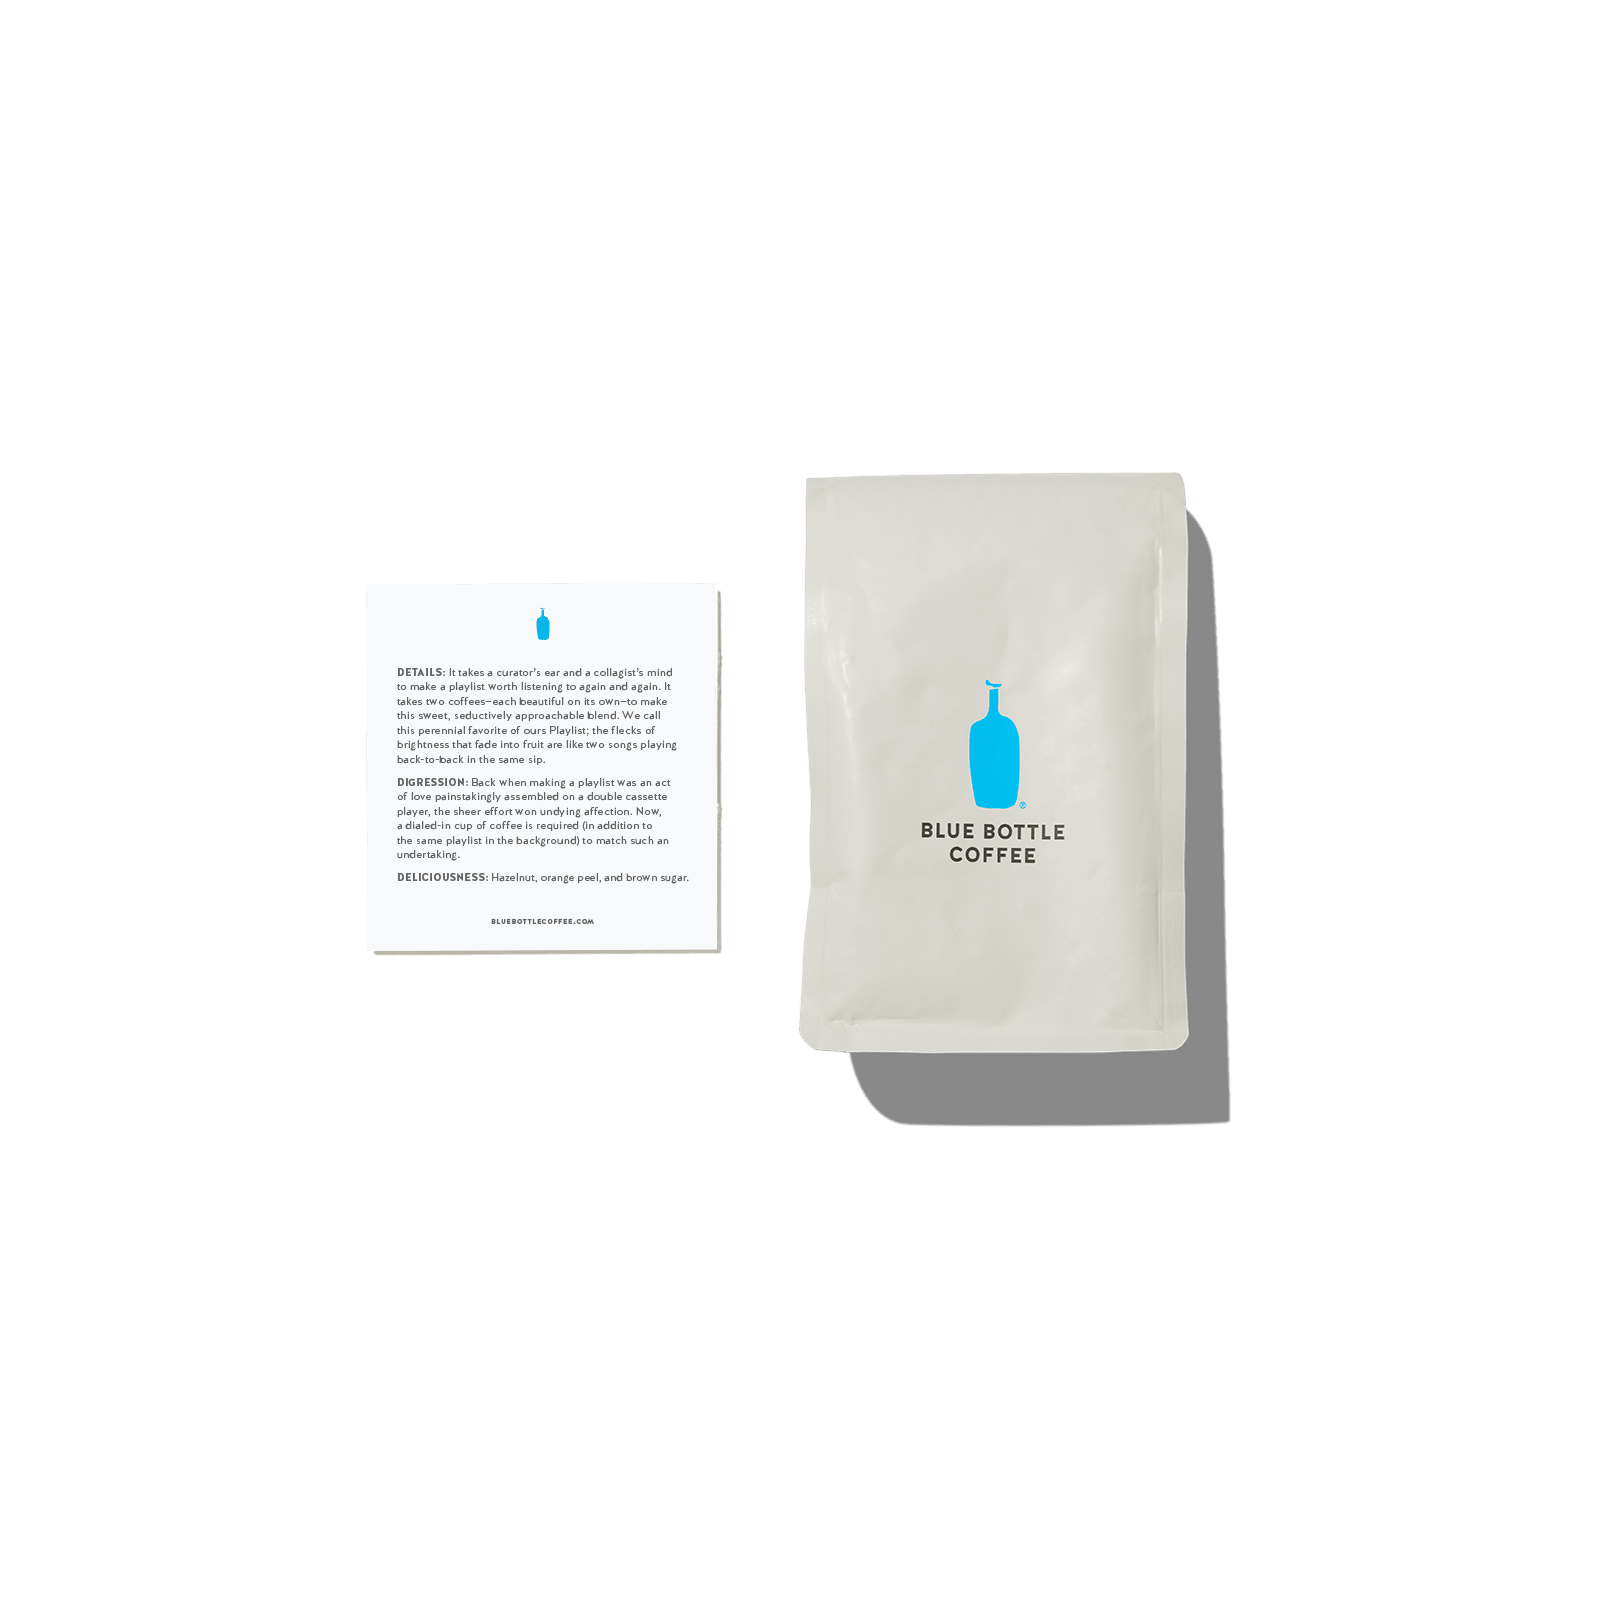 Bag of coffee and info card.